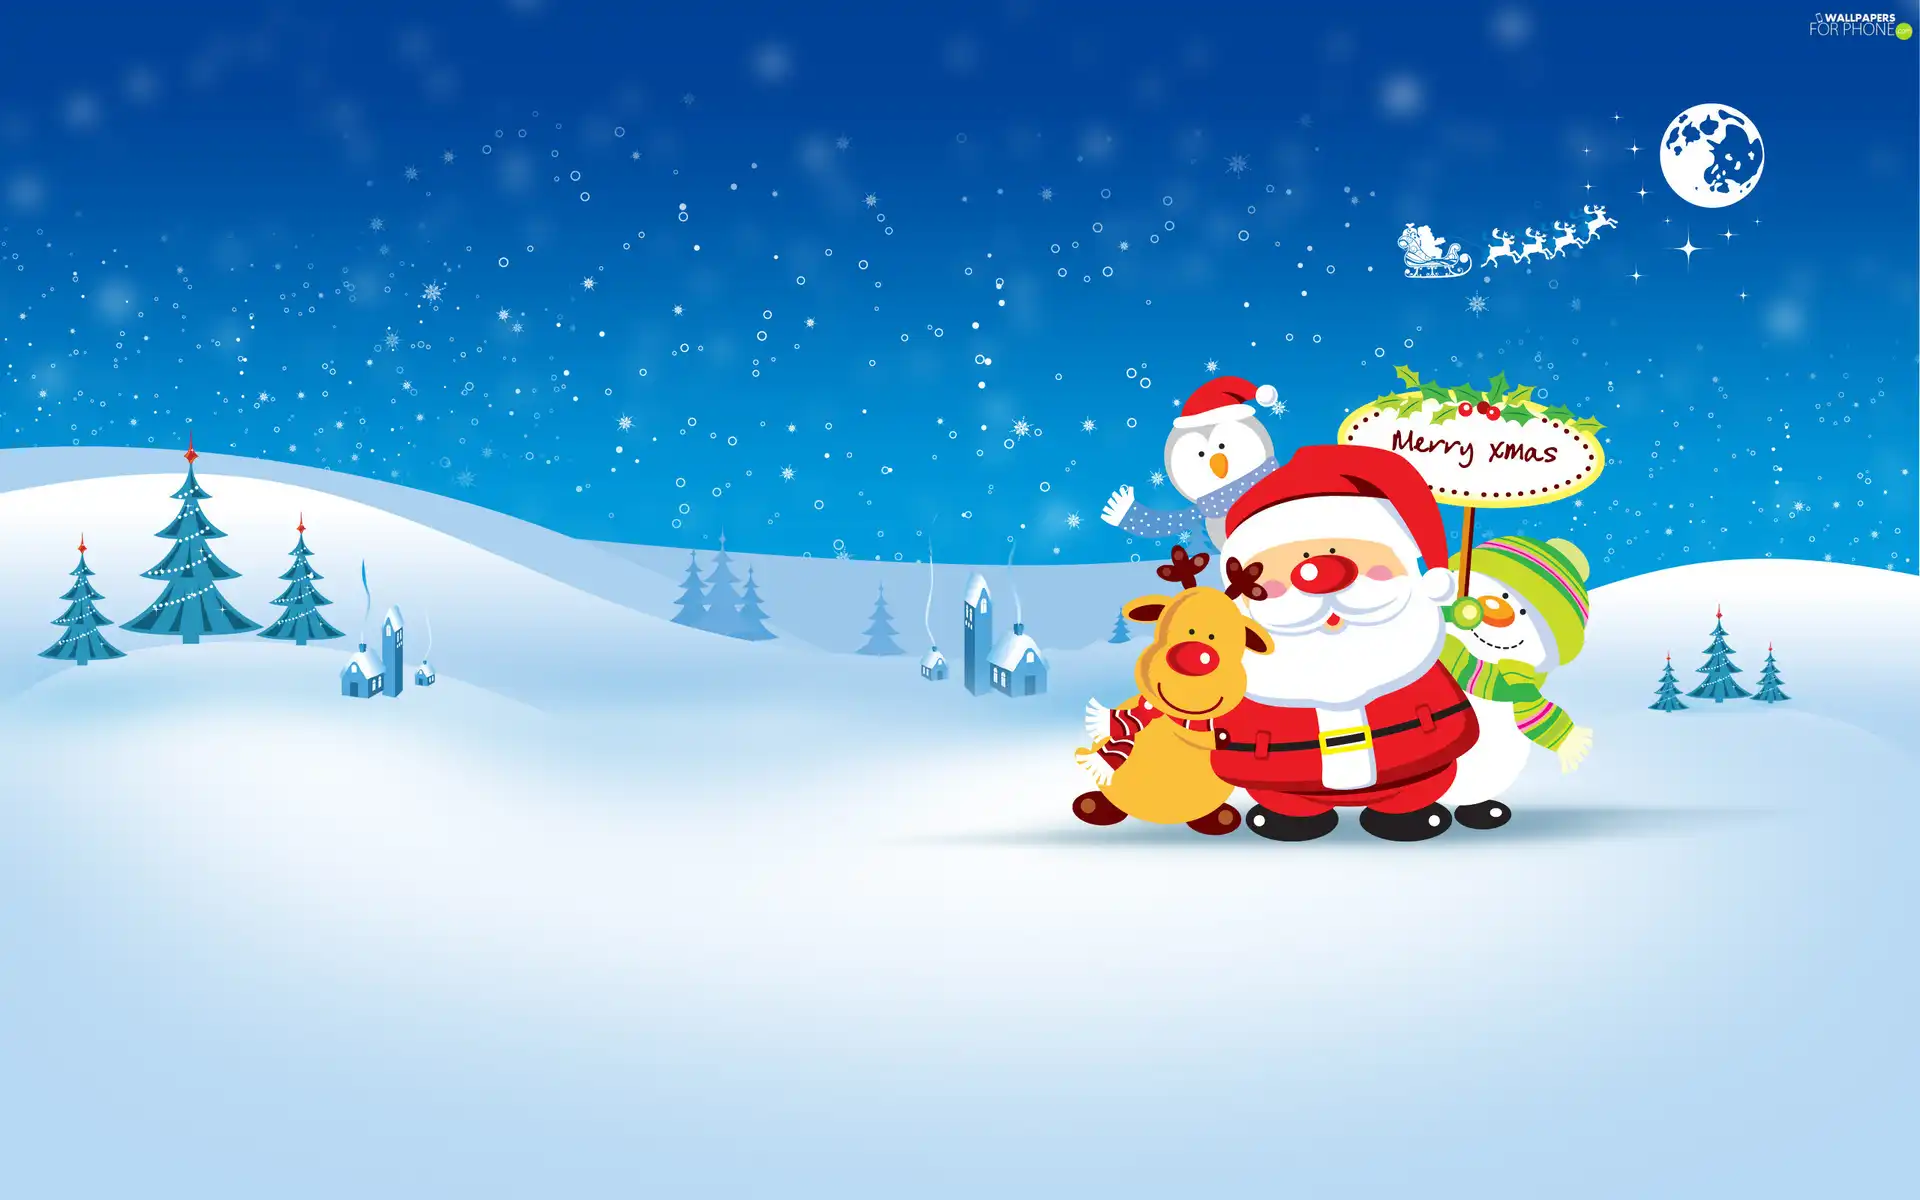 Santa, Snowman, snow, reindeer